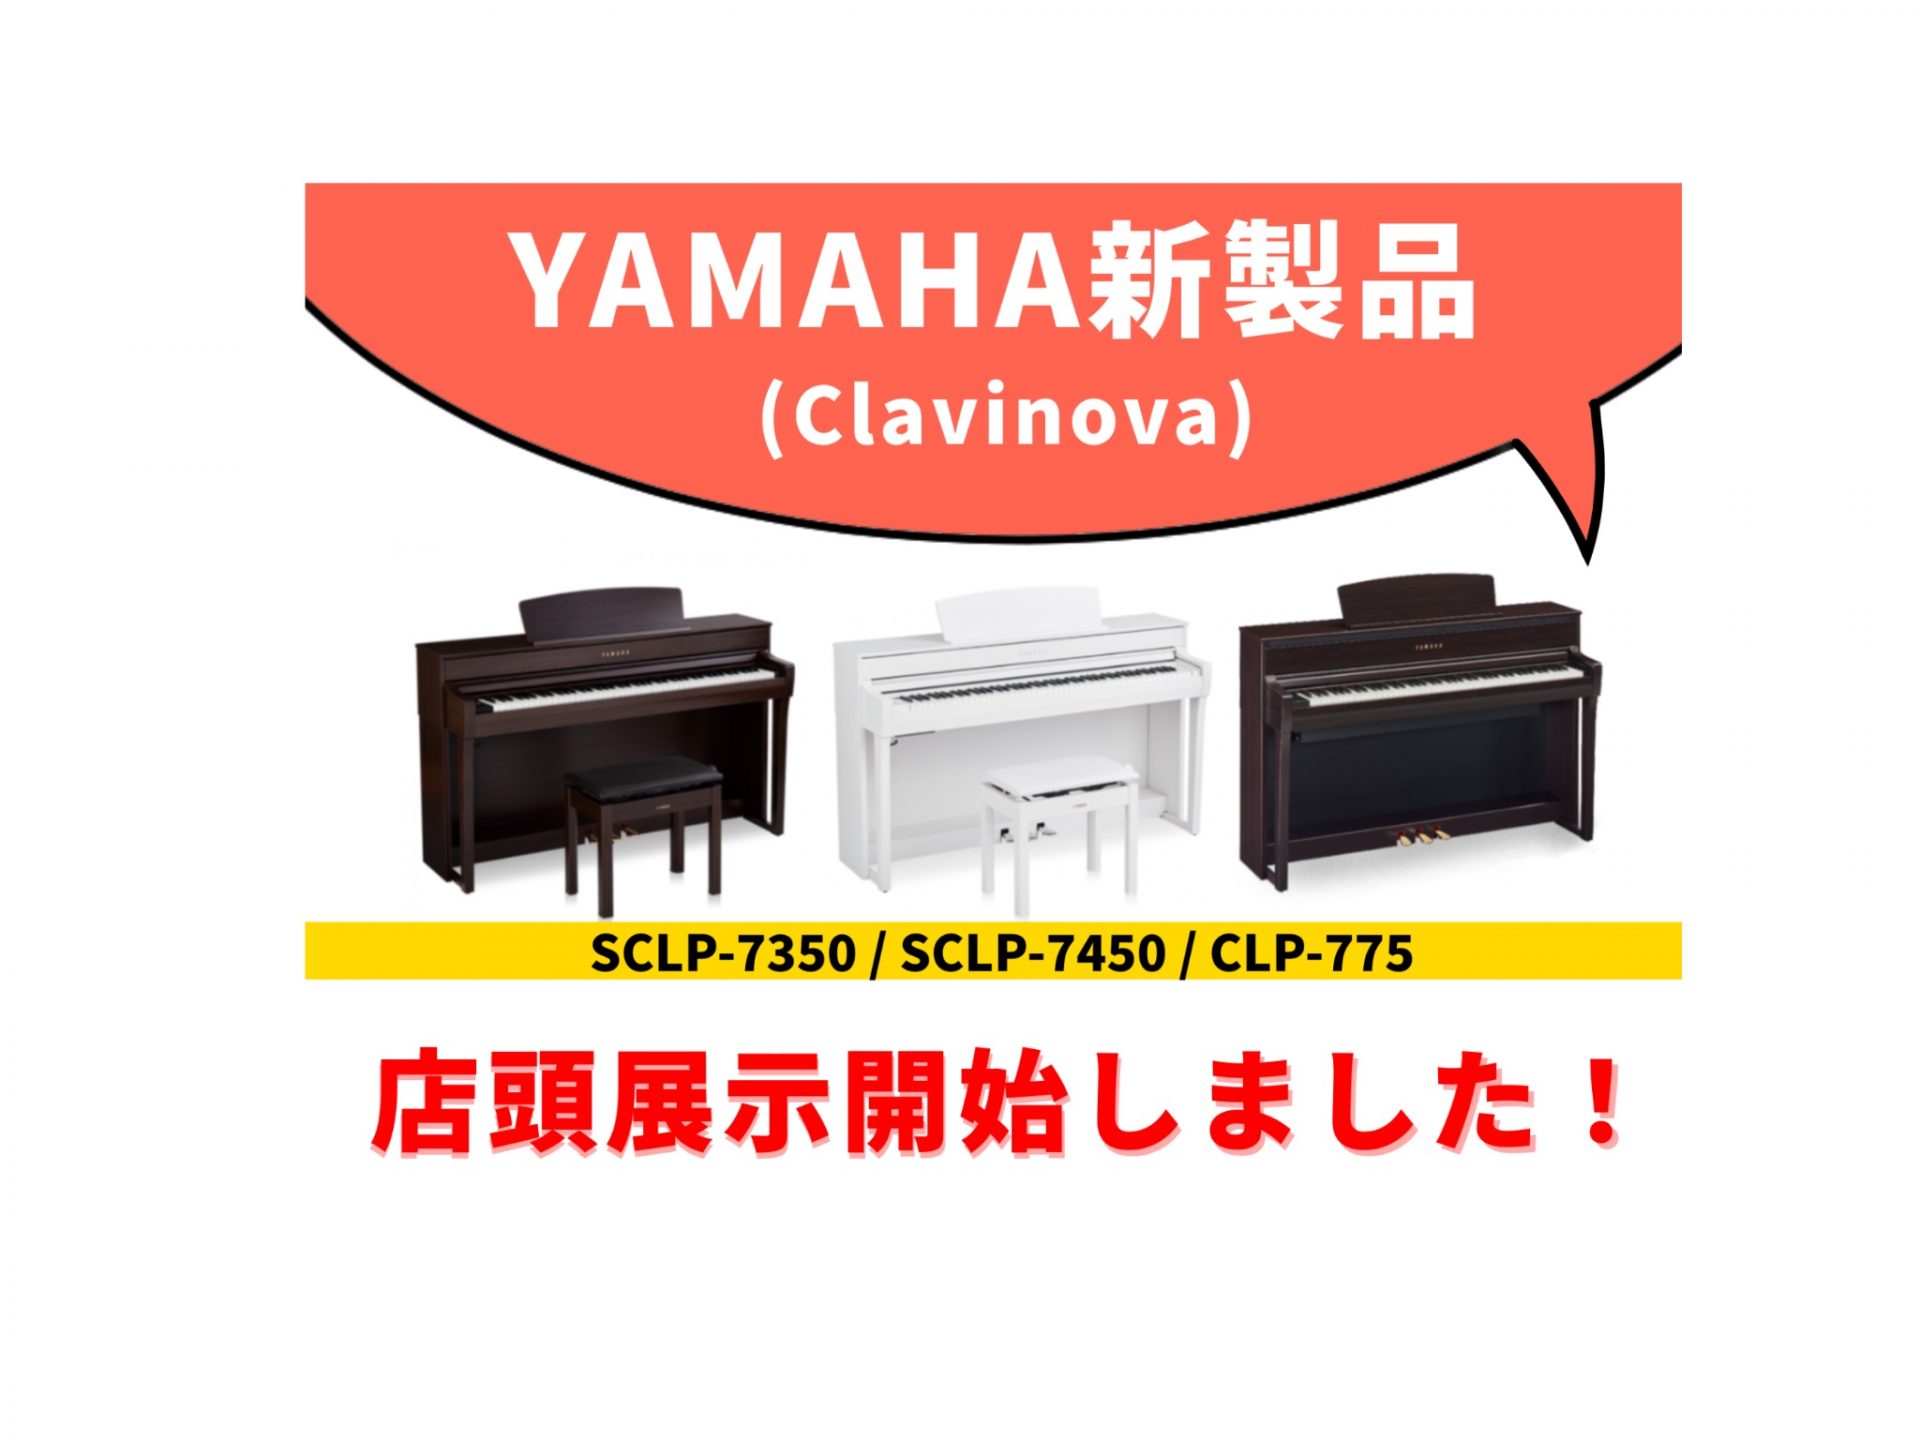 YAMAHA新製品クラビノーバが本日から展示開始！